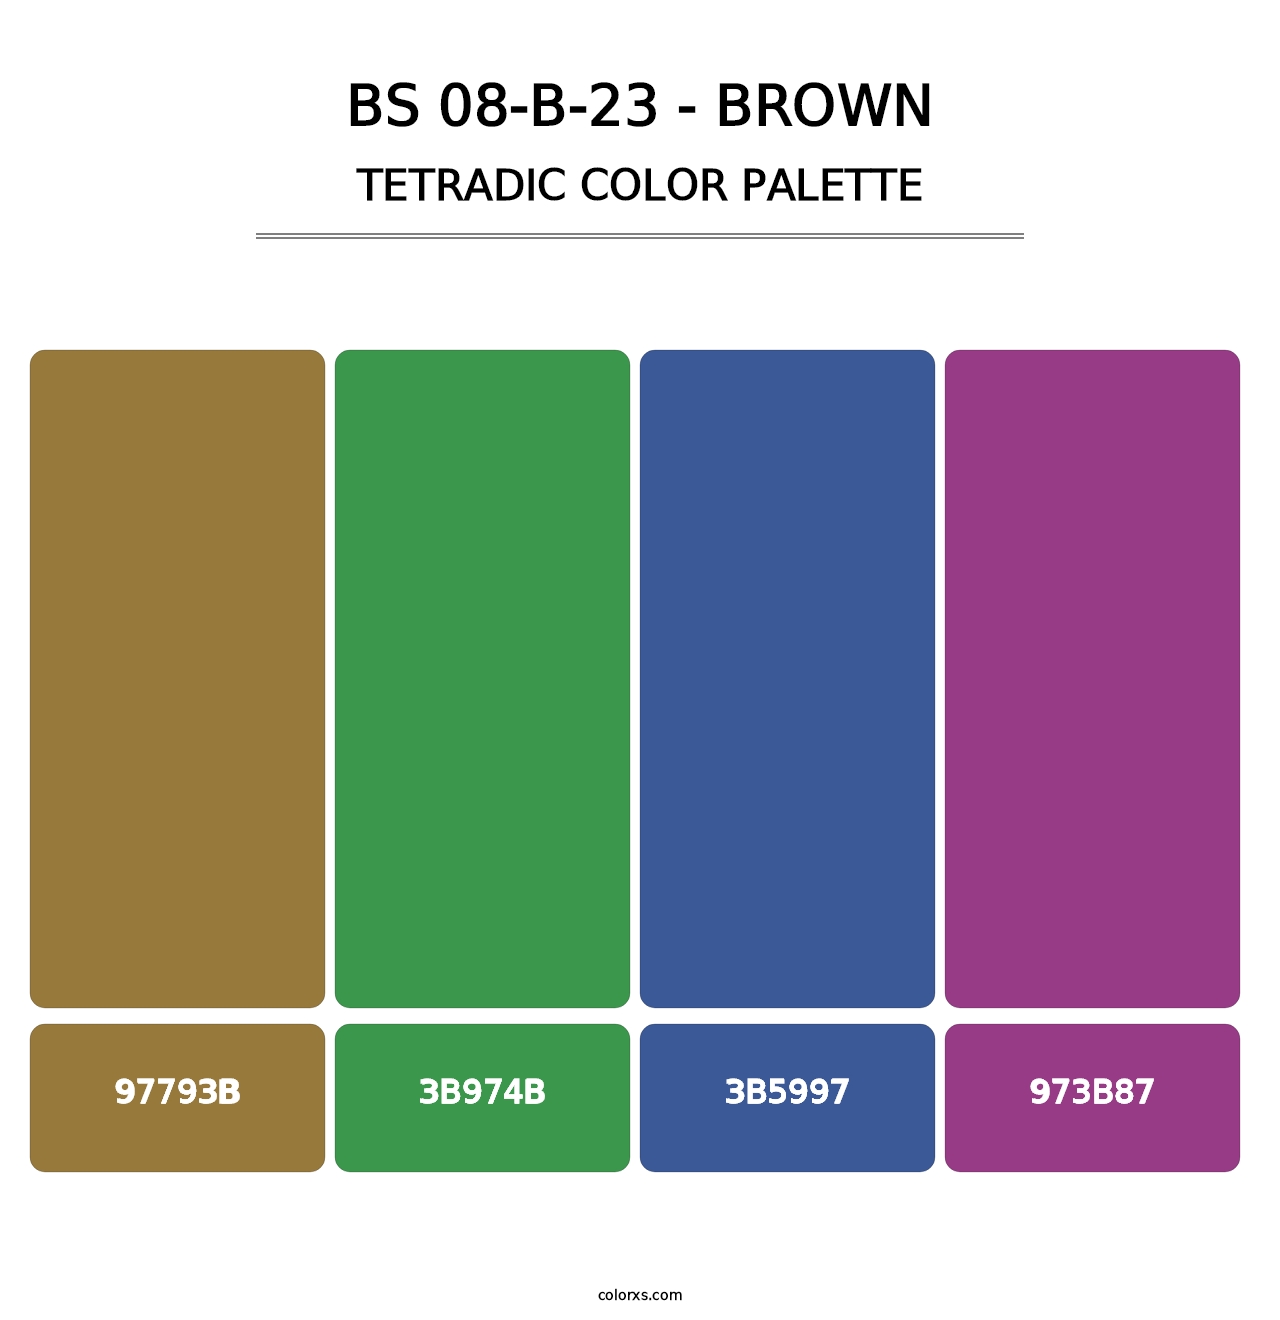 BS 08-B-23 - Brown - Tetradic Color Palette